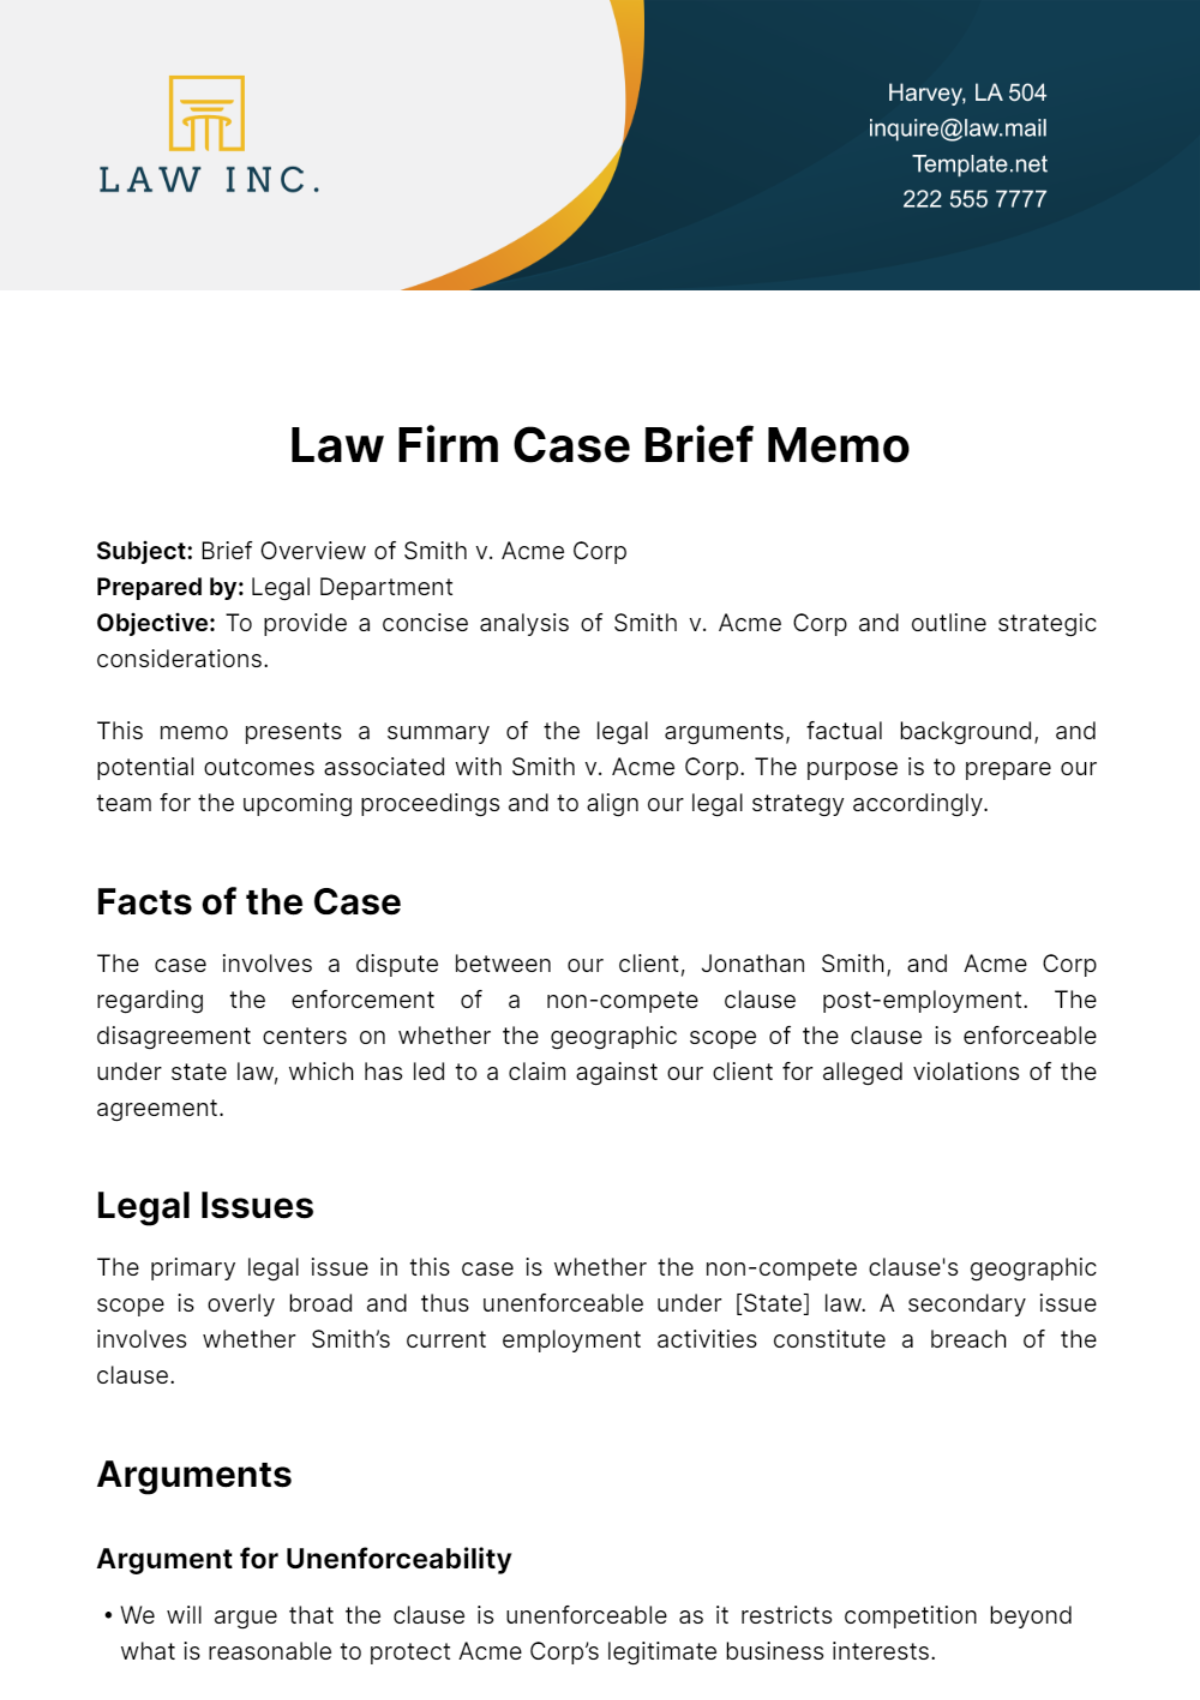 Law Firm Case Brief Memo Template